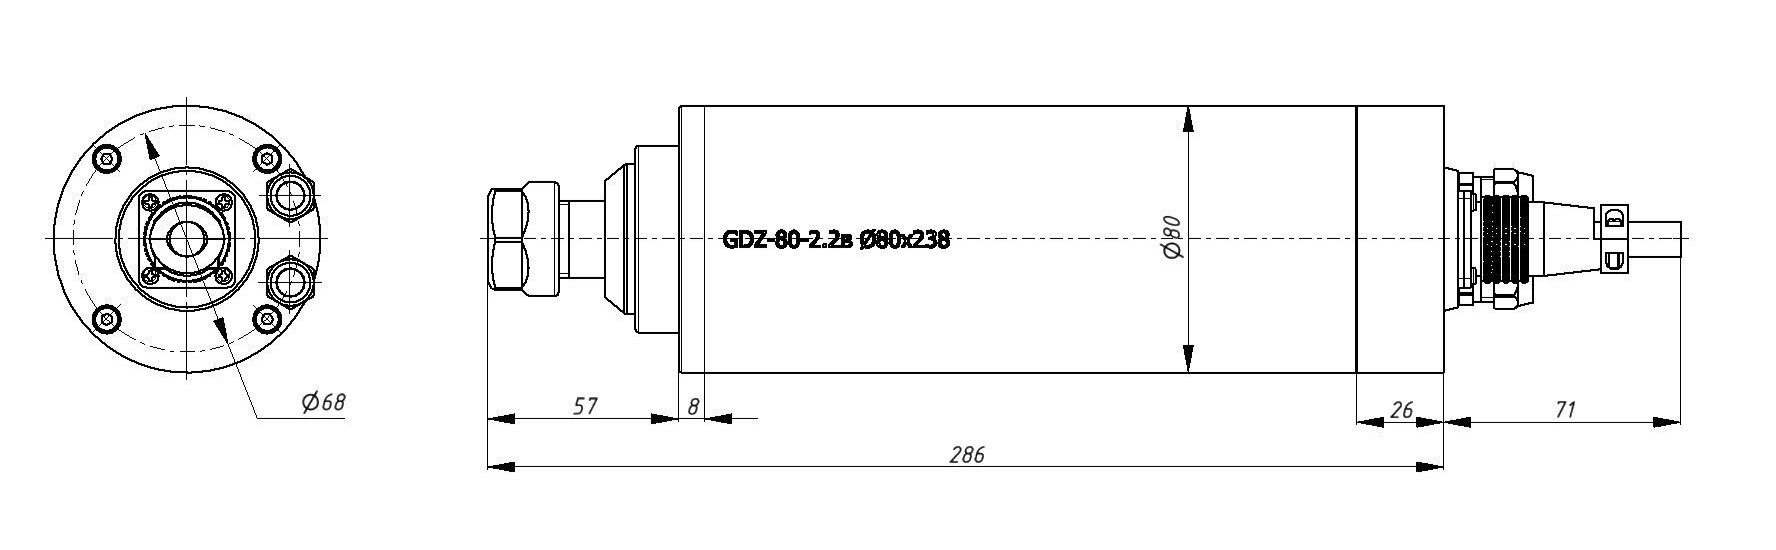 GDZ-80-22kW.jpg